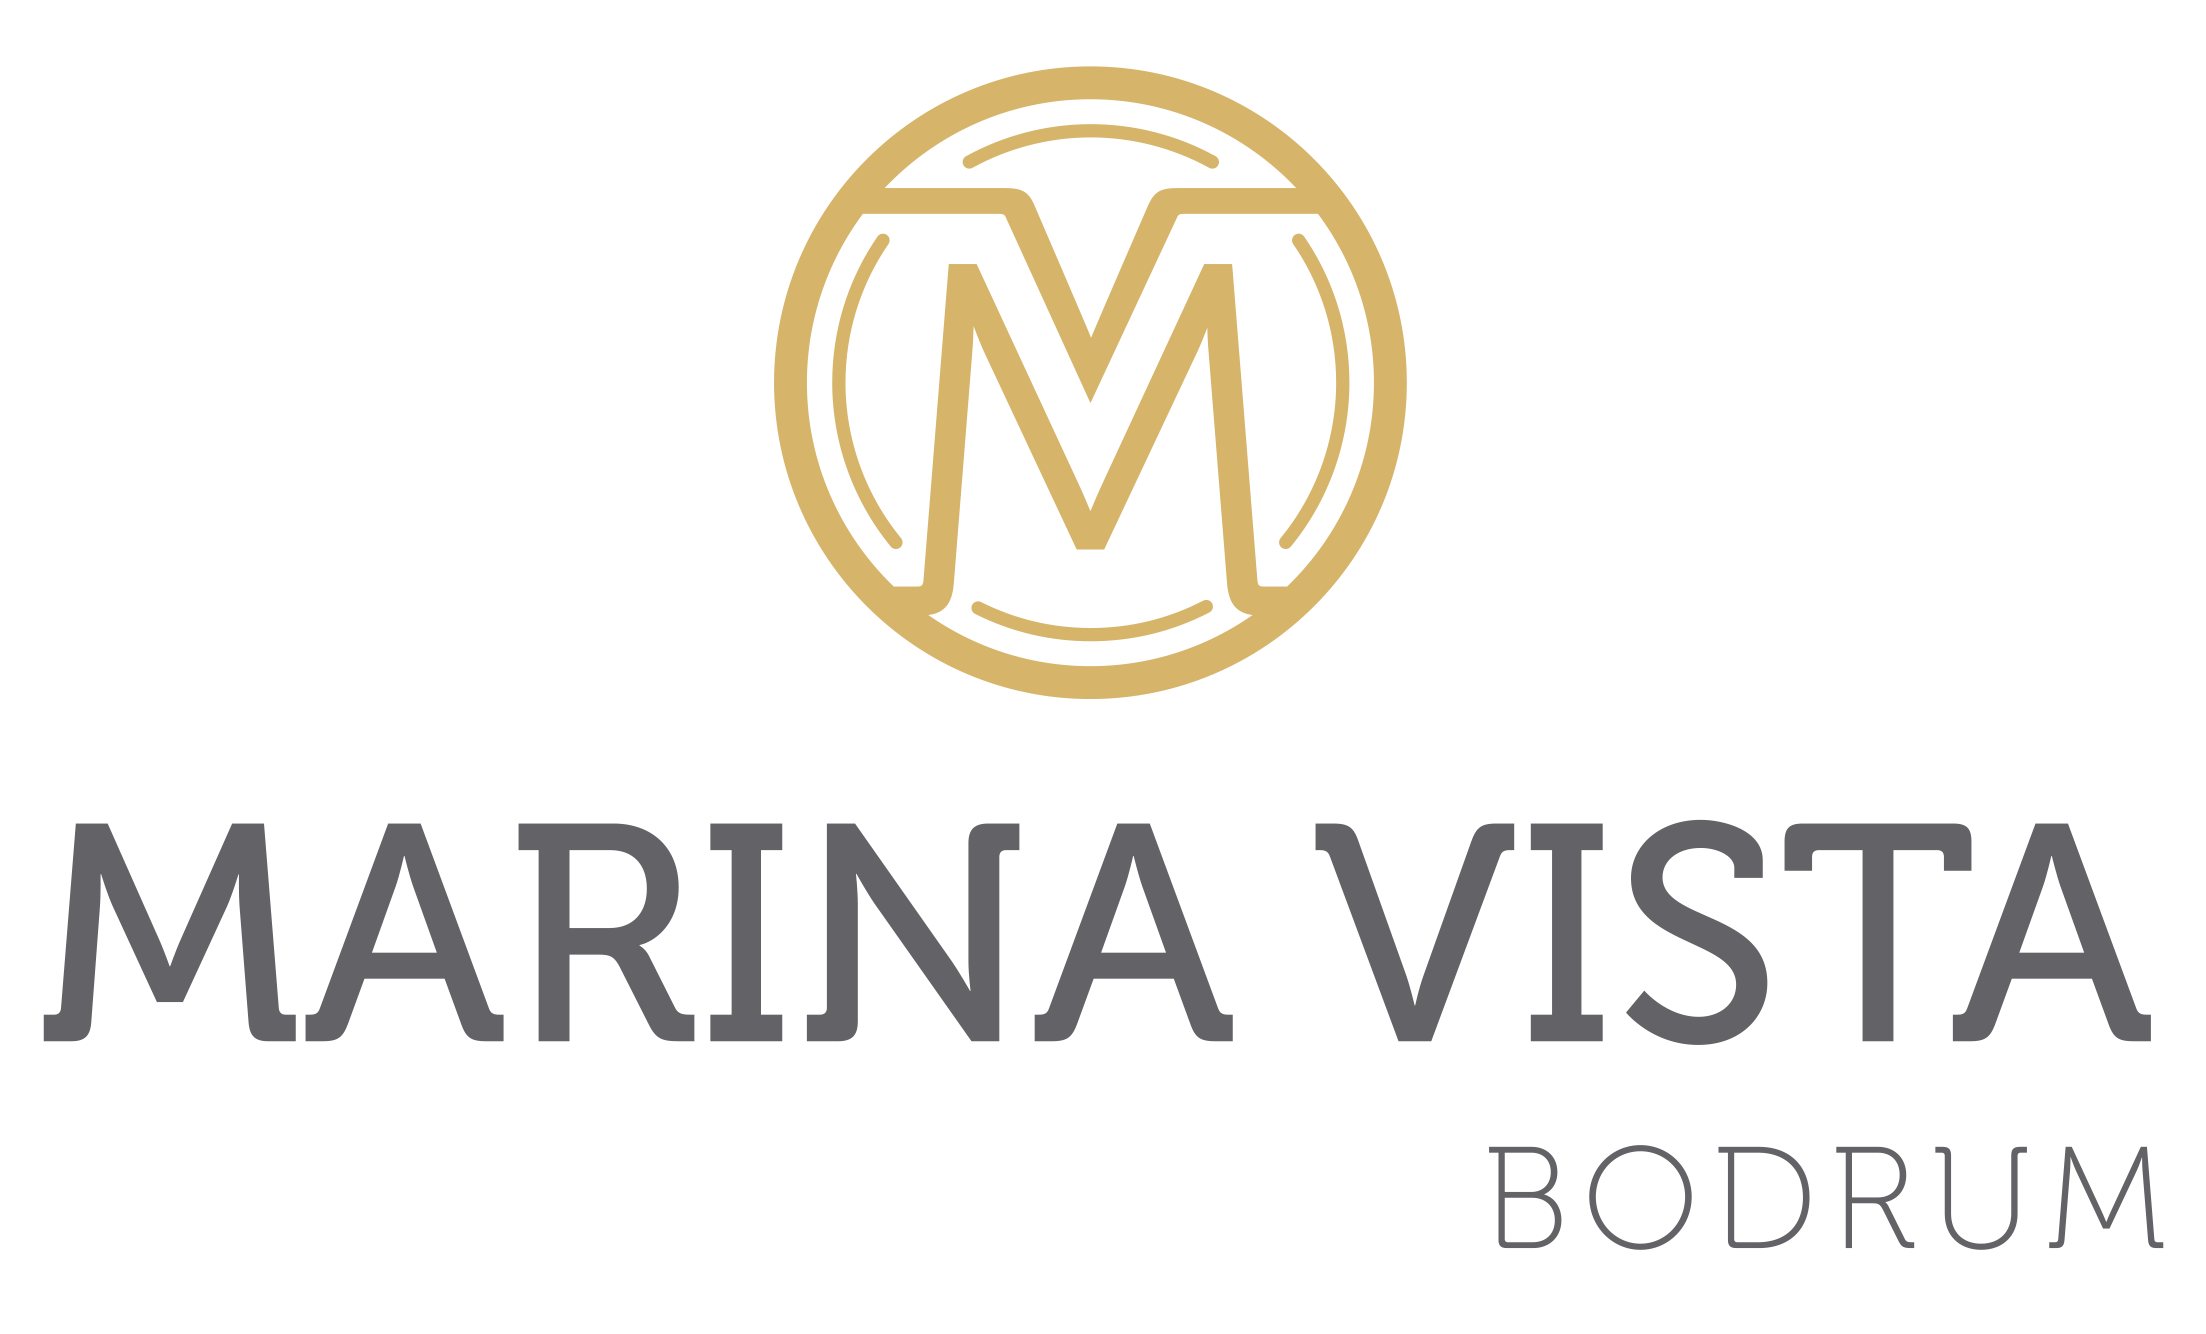 Marina Vista